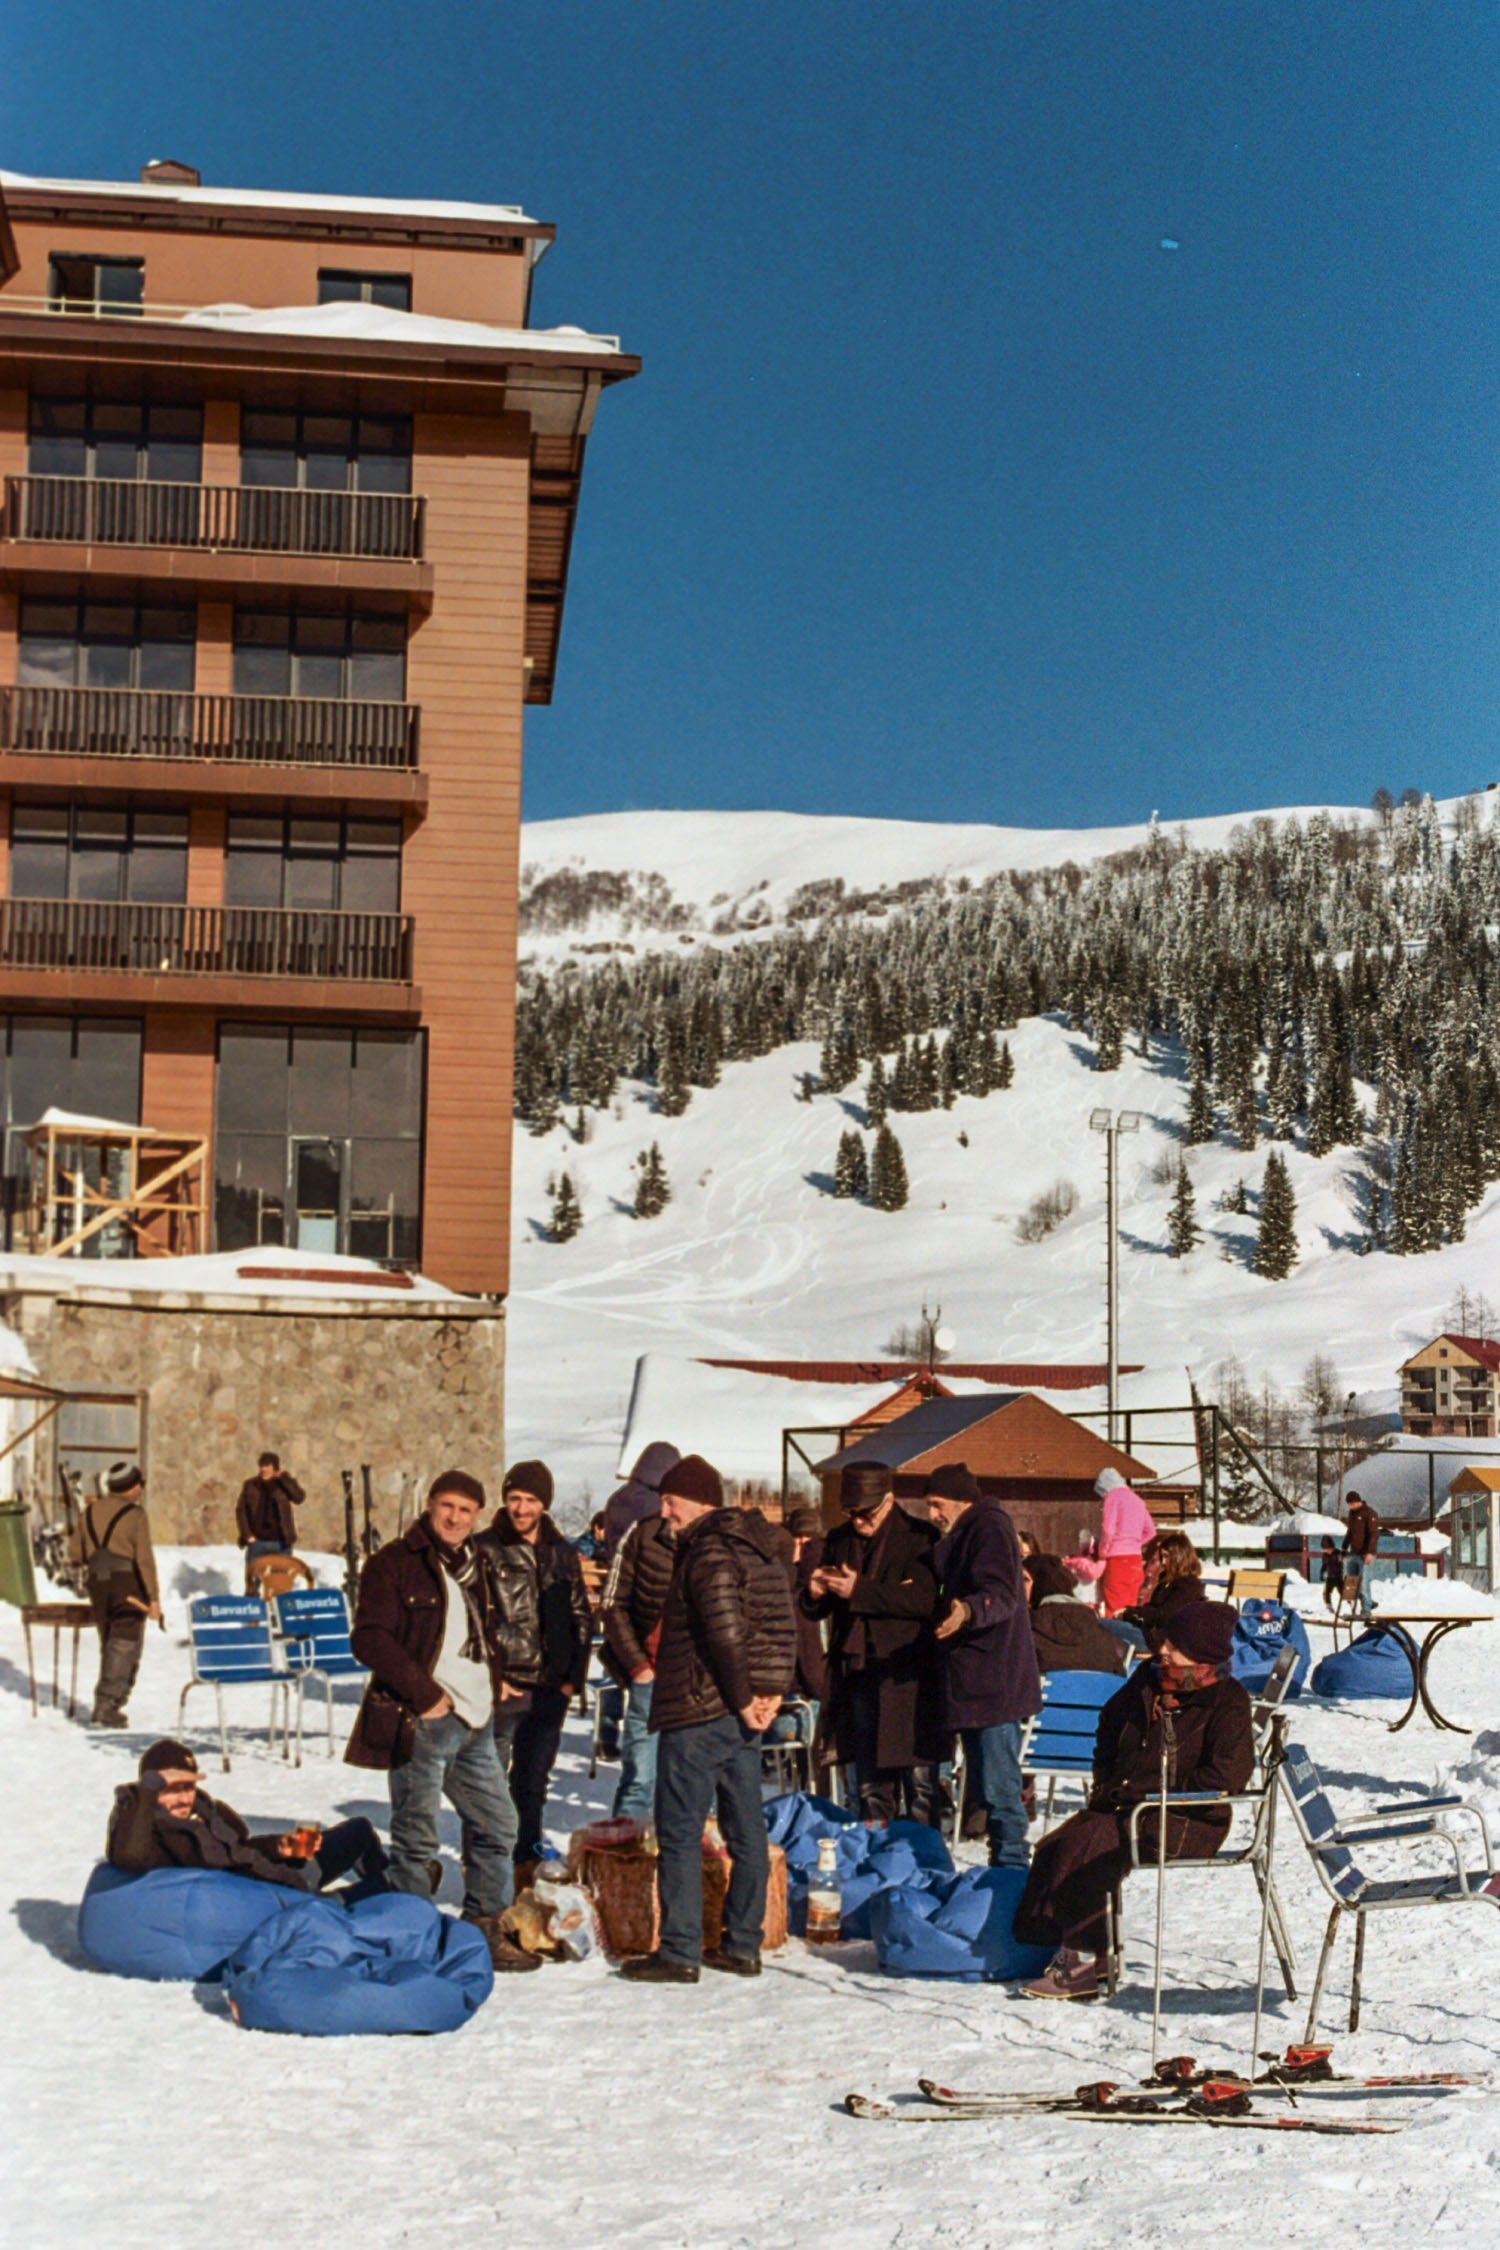 Weekend visitors enjoy drinks and a picnic at the base of Goderdzi ski resort